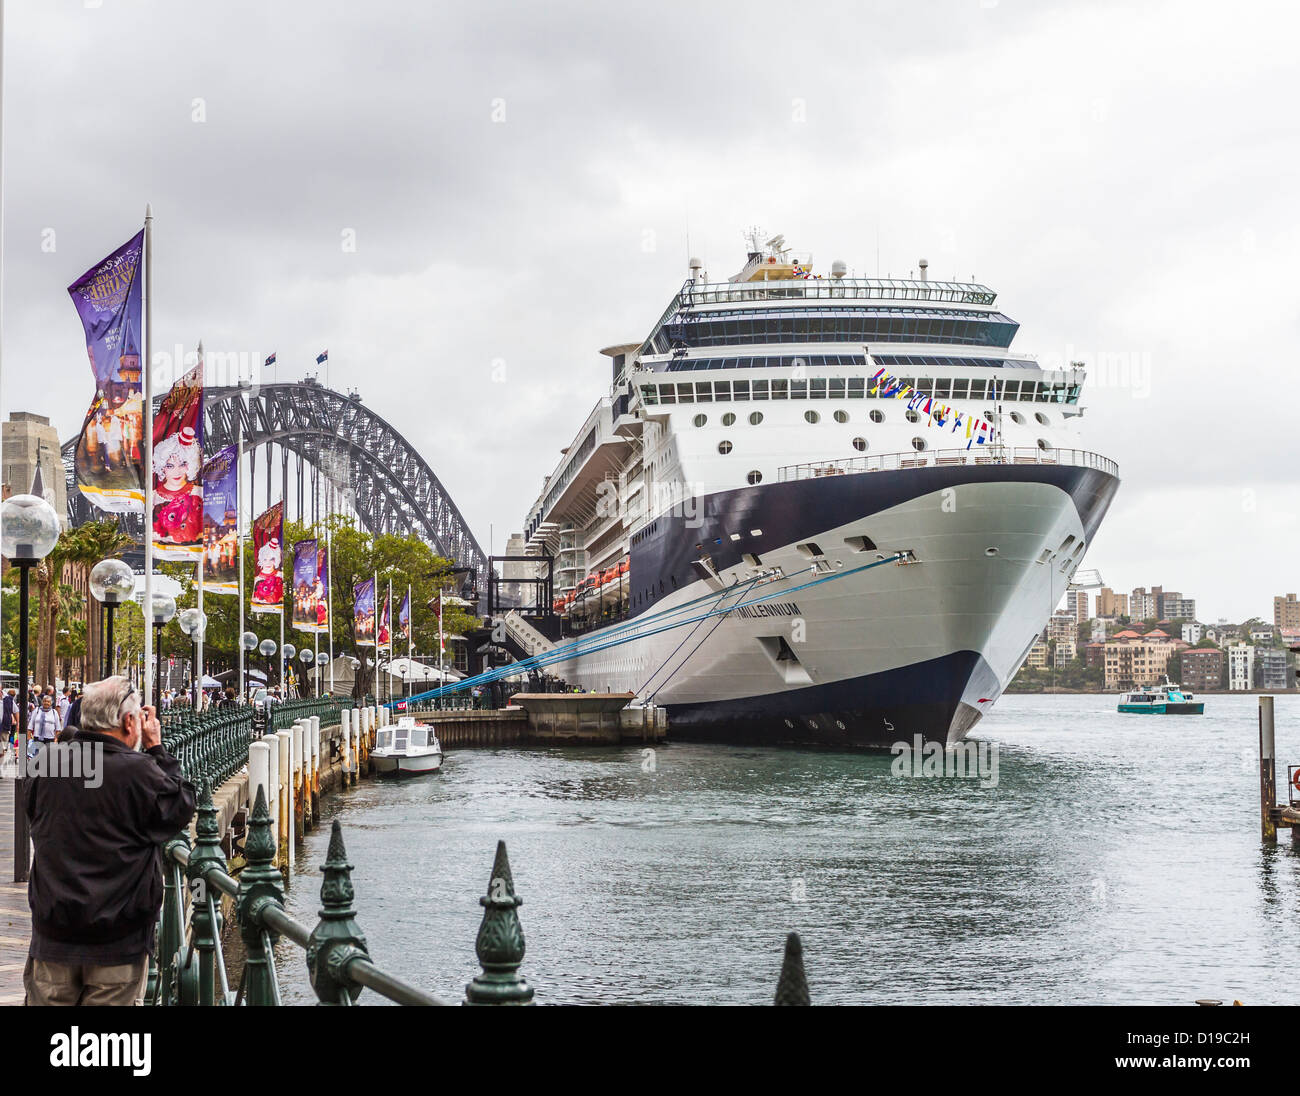 celebrity cruise ship in sydney